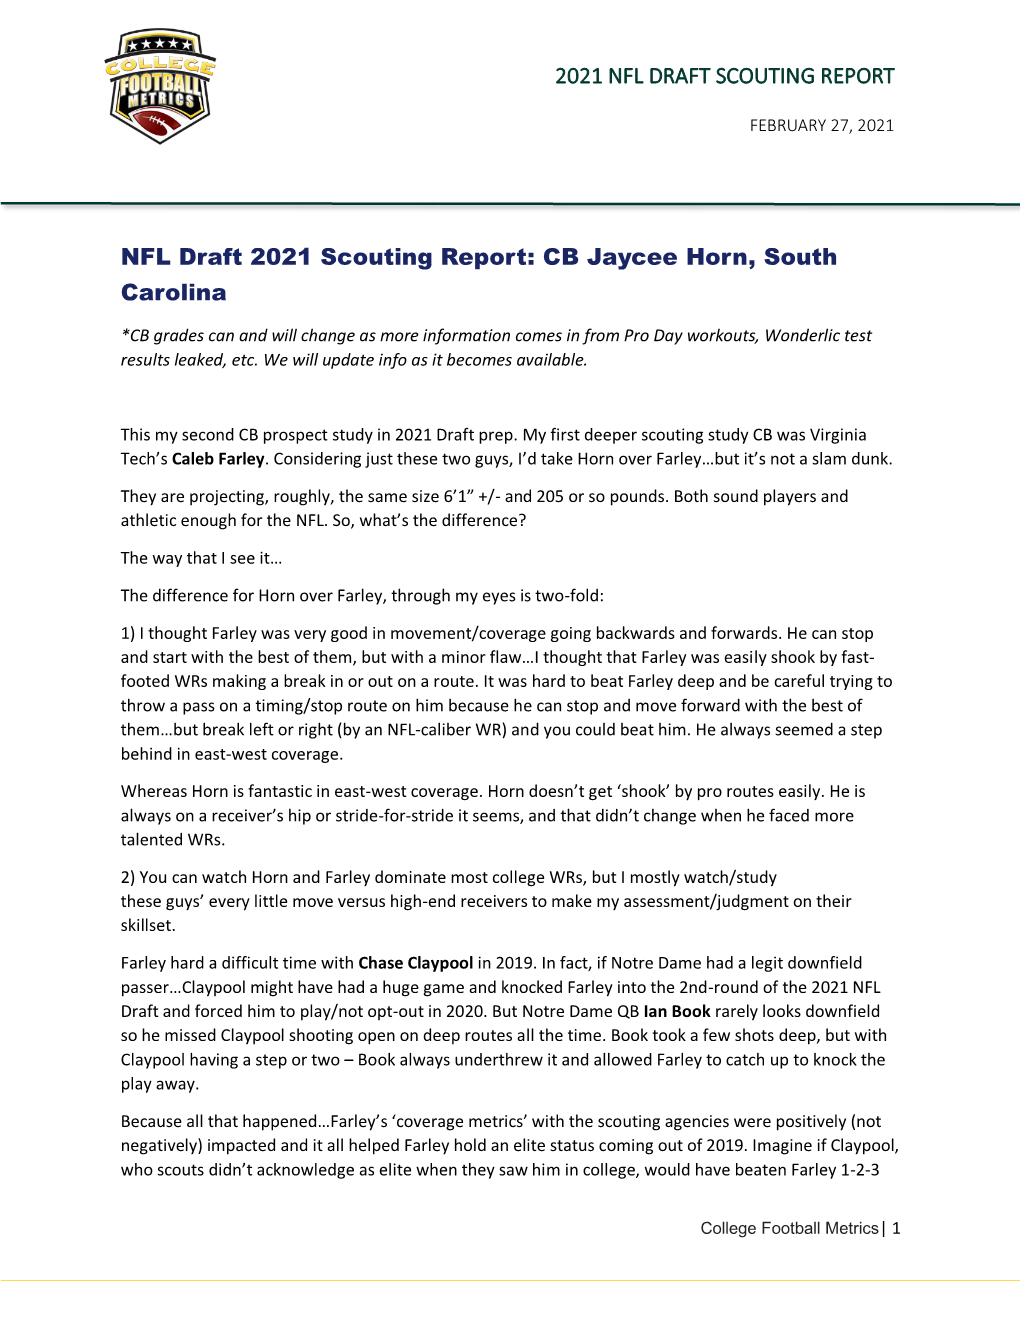 NFL Draft 2021 Scouting Report: CB Jaycee Horn, South Carolina